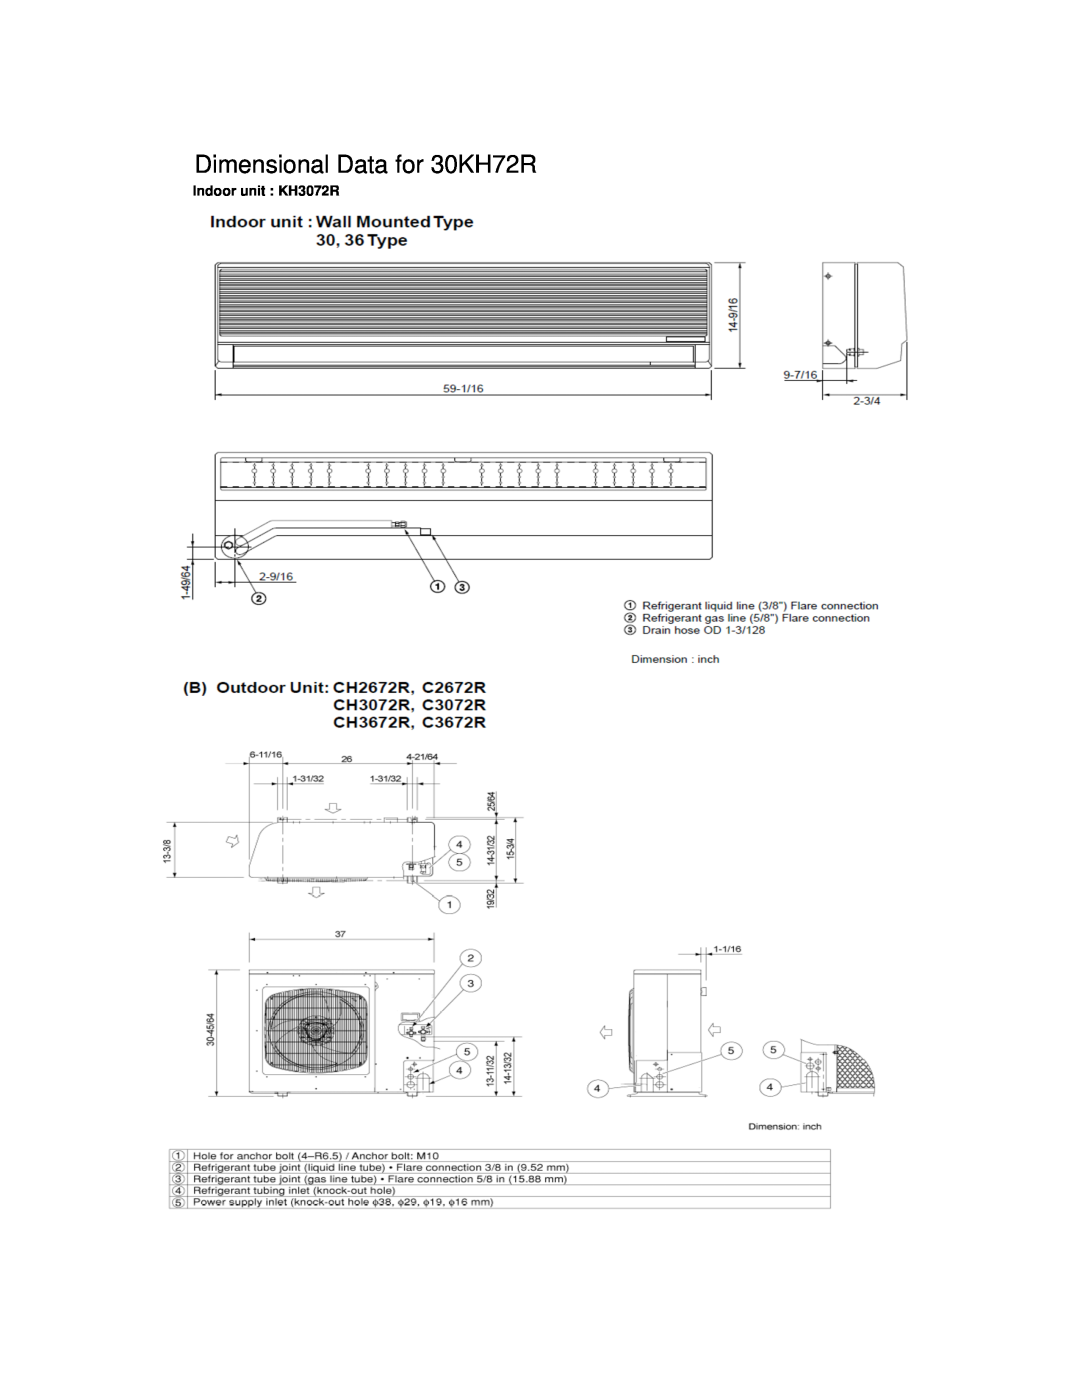 Sanyo manual Dimensional Data for 30KH72R, Indoor unit KH3072R 